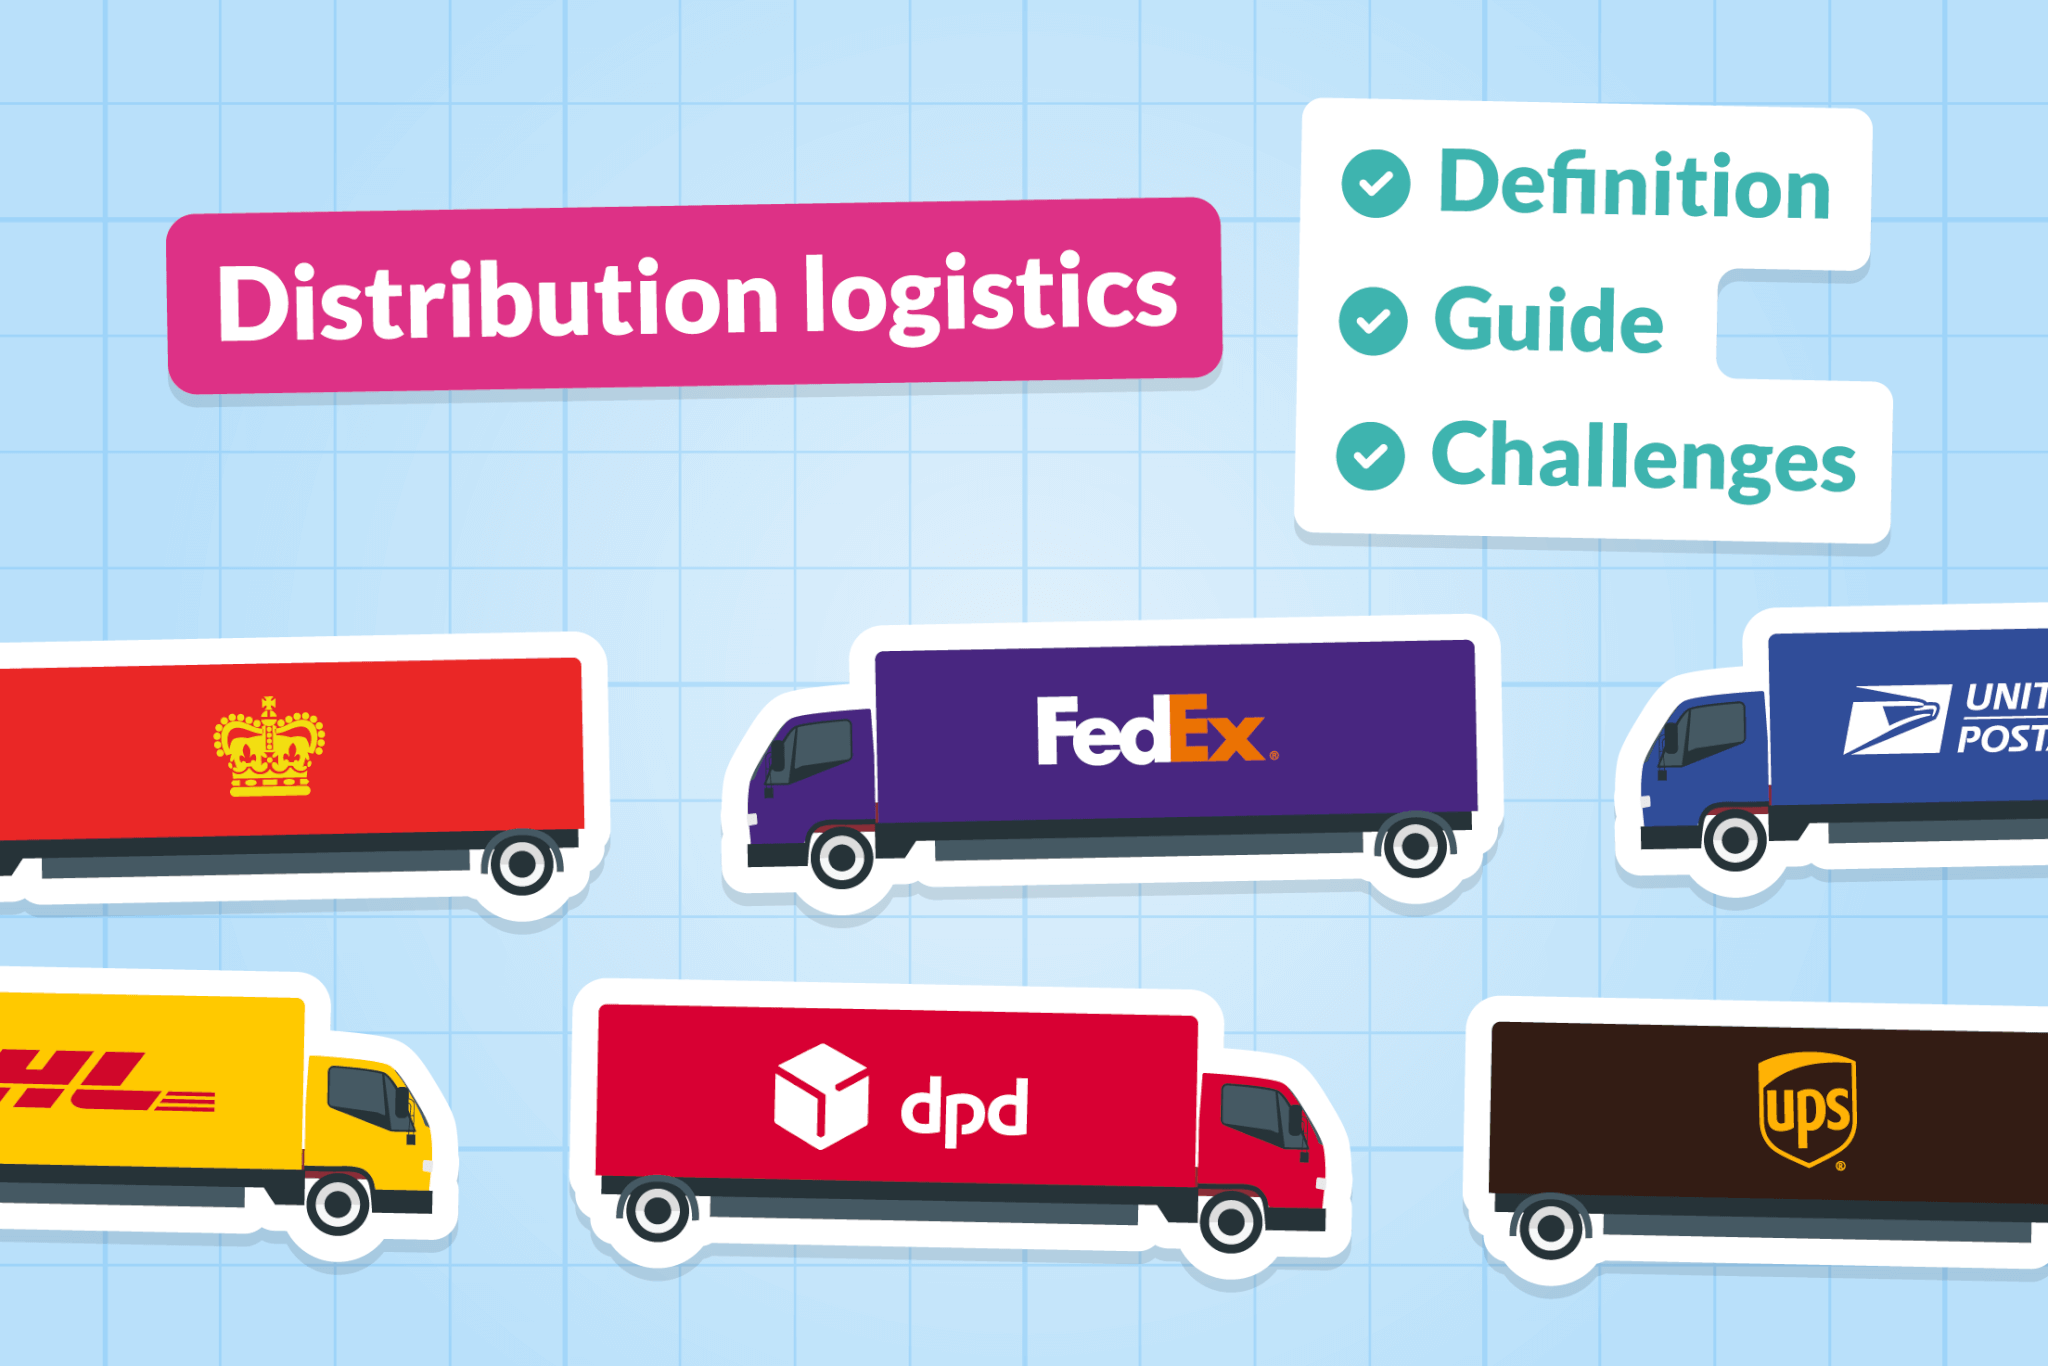 Distribution logistics